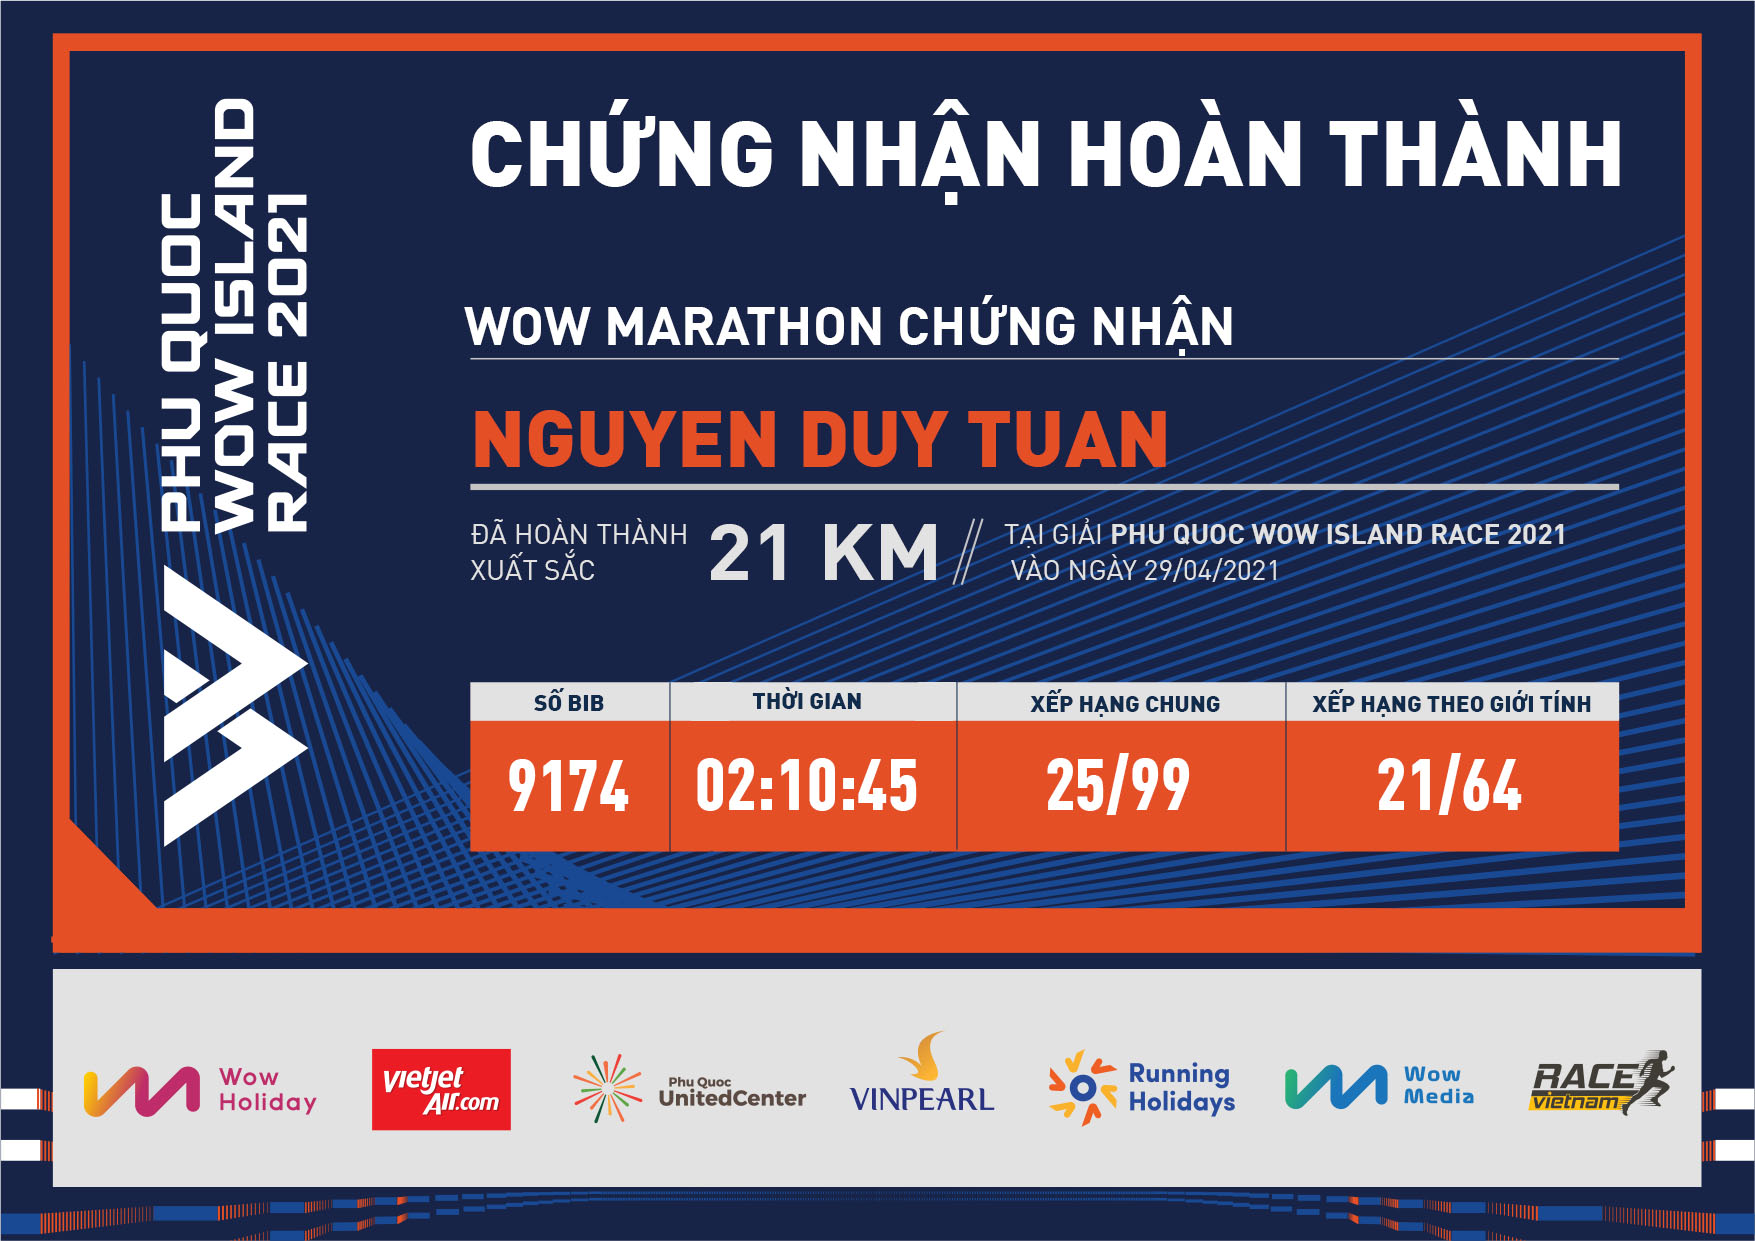 9174 - Nguyen DUY Tuan